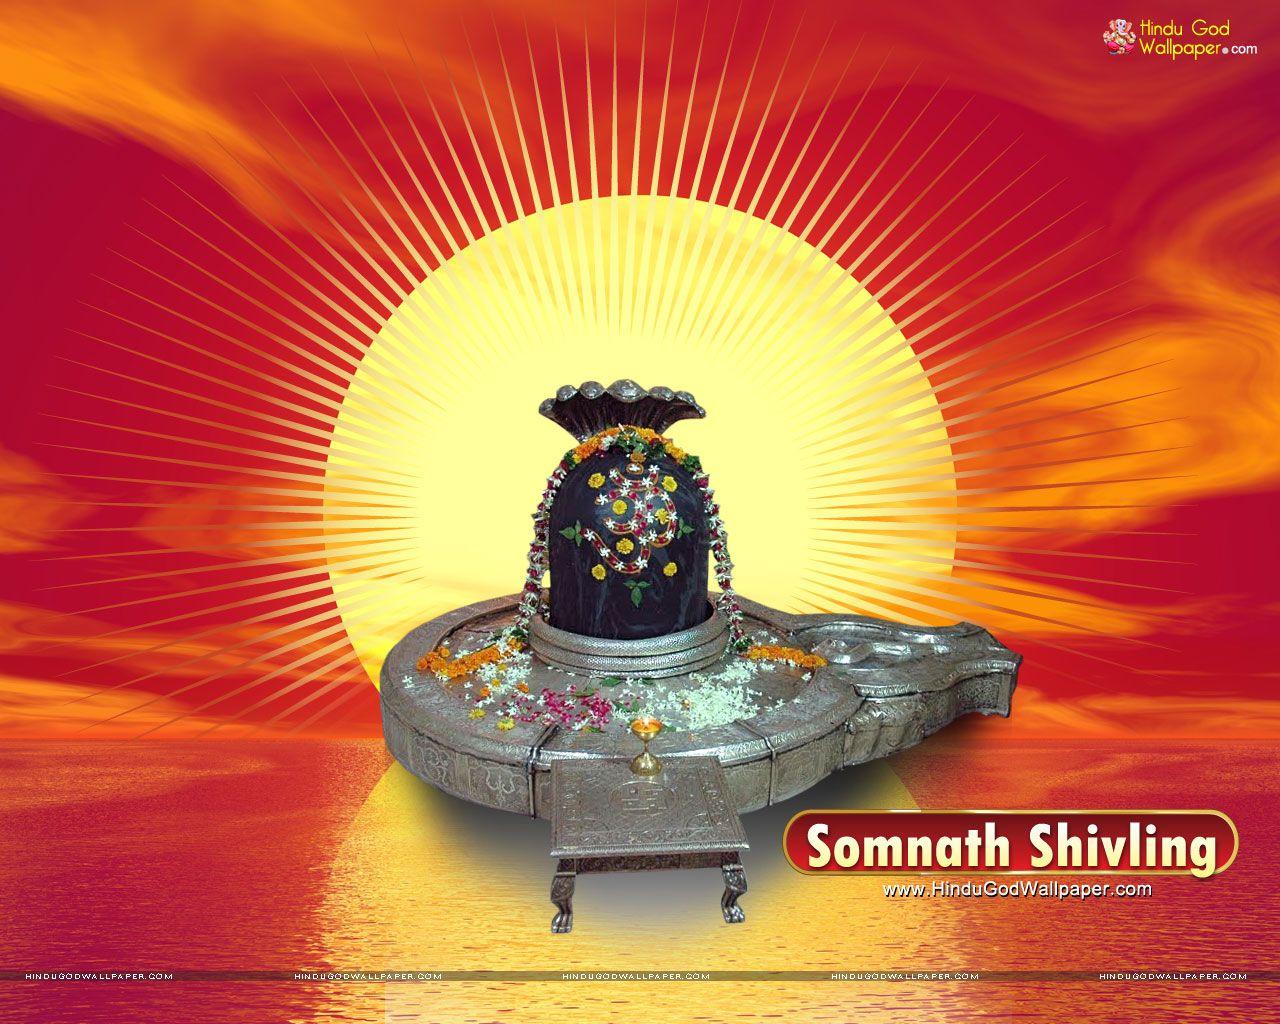 Somnath Shivling Wallpaper Free Download. Somnath Wallpaper